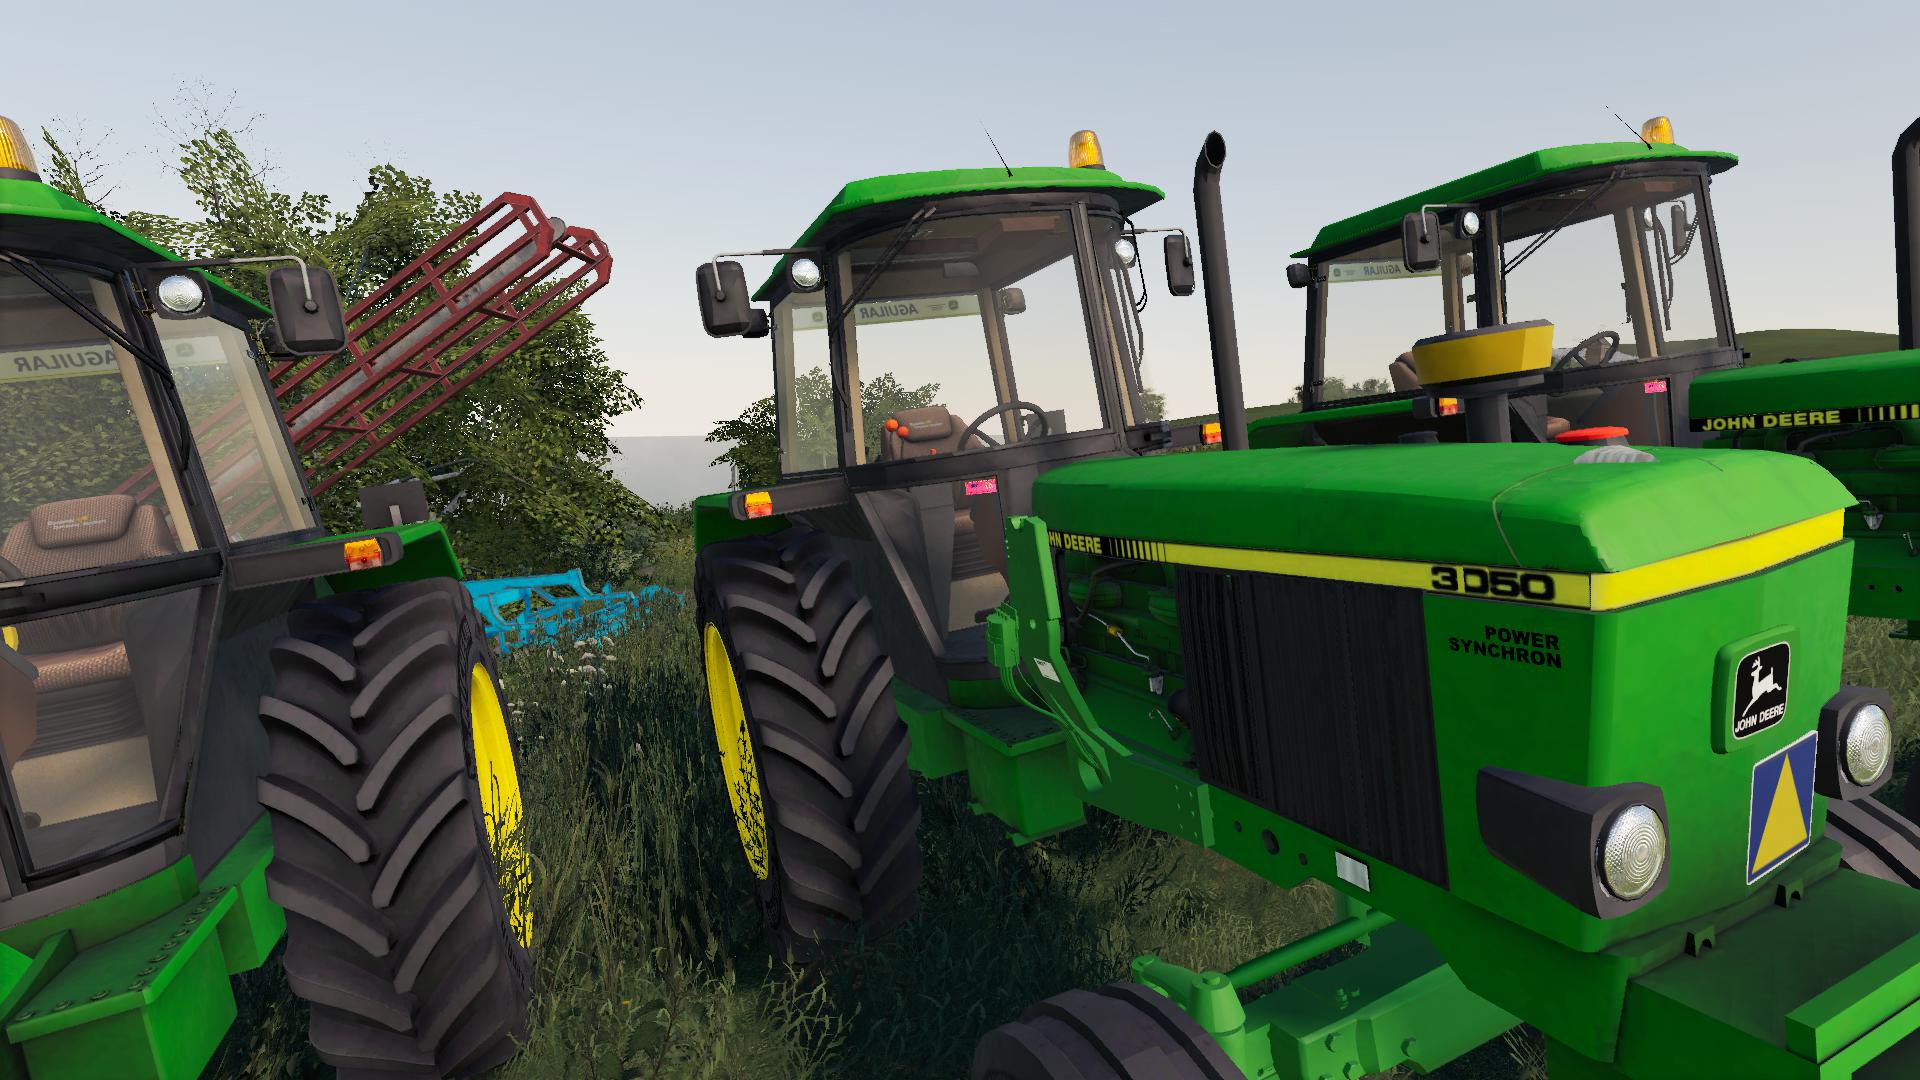 Tracteur John Deere 3x50 V10 Fs19 Fs19 Mods Farming Simulator 19 Mods Images And Photos Finder 3927